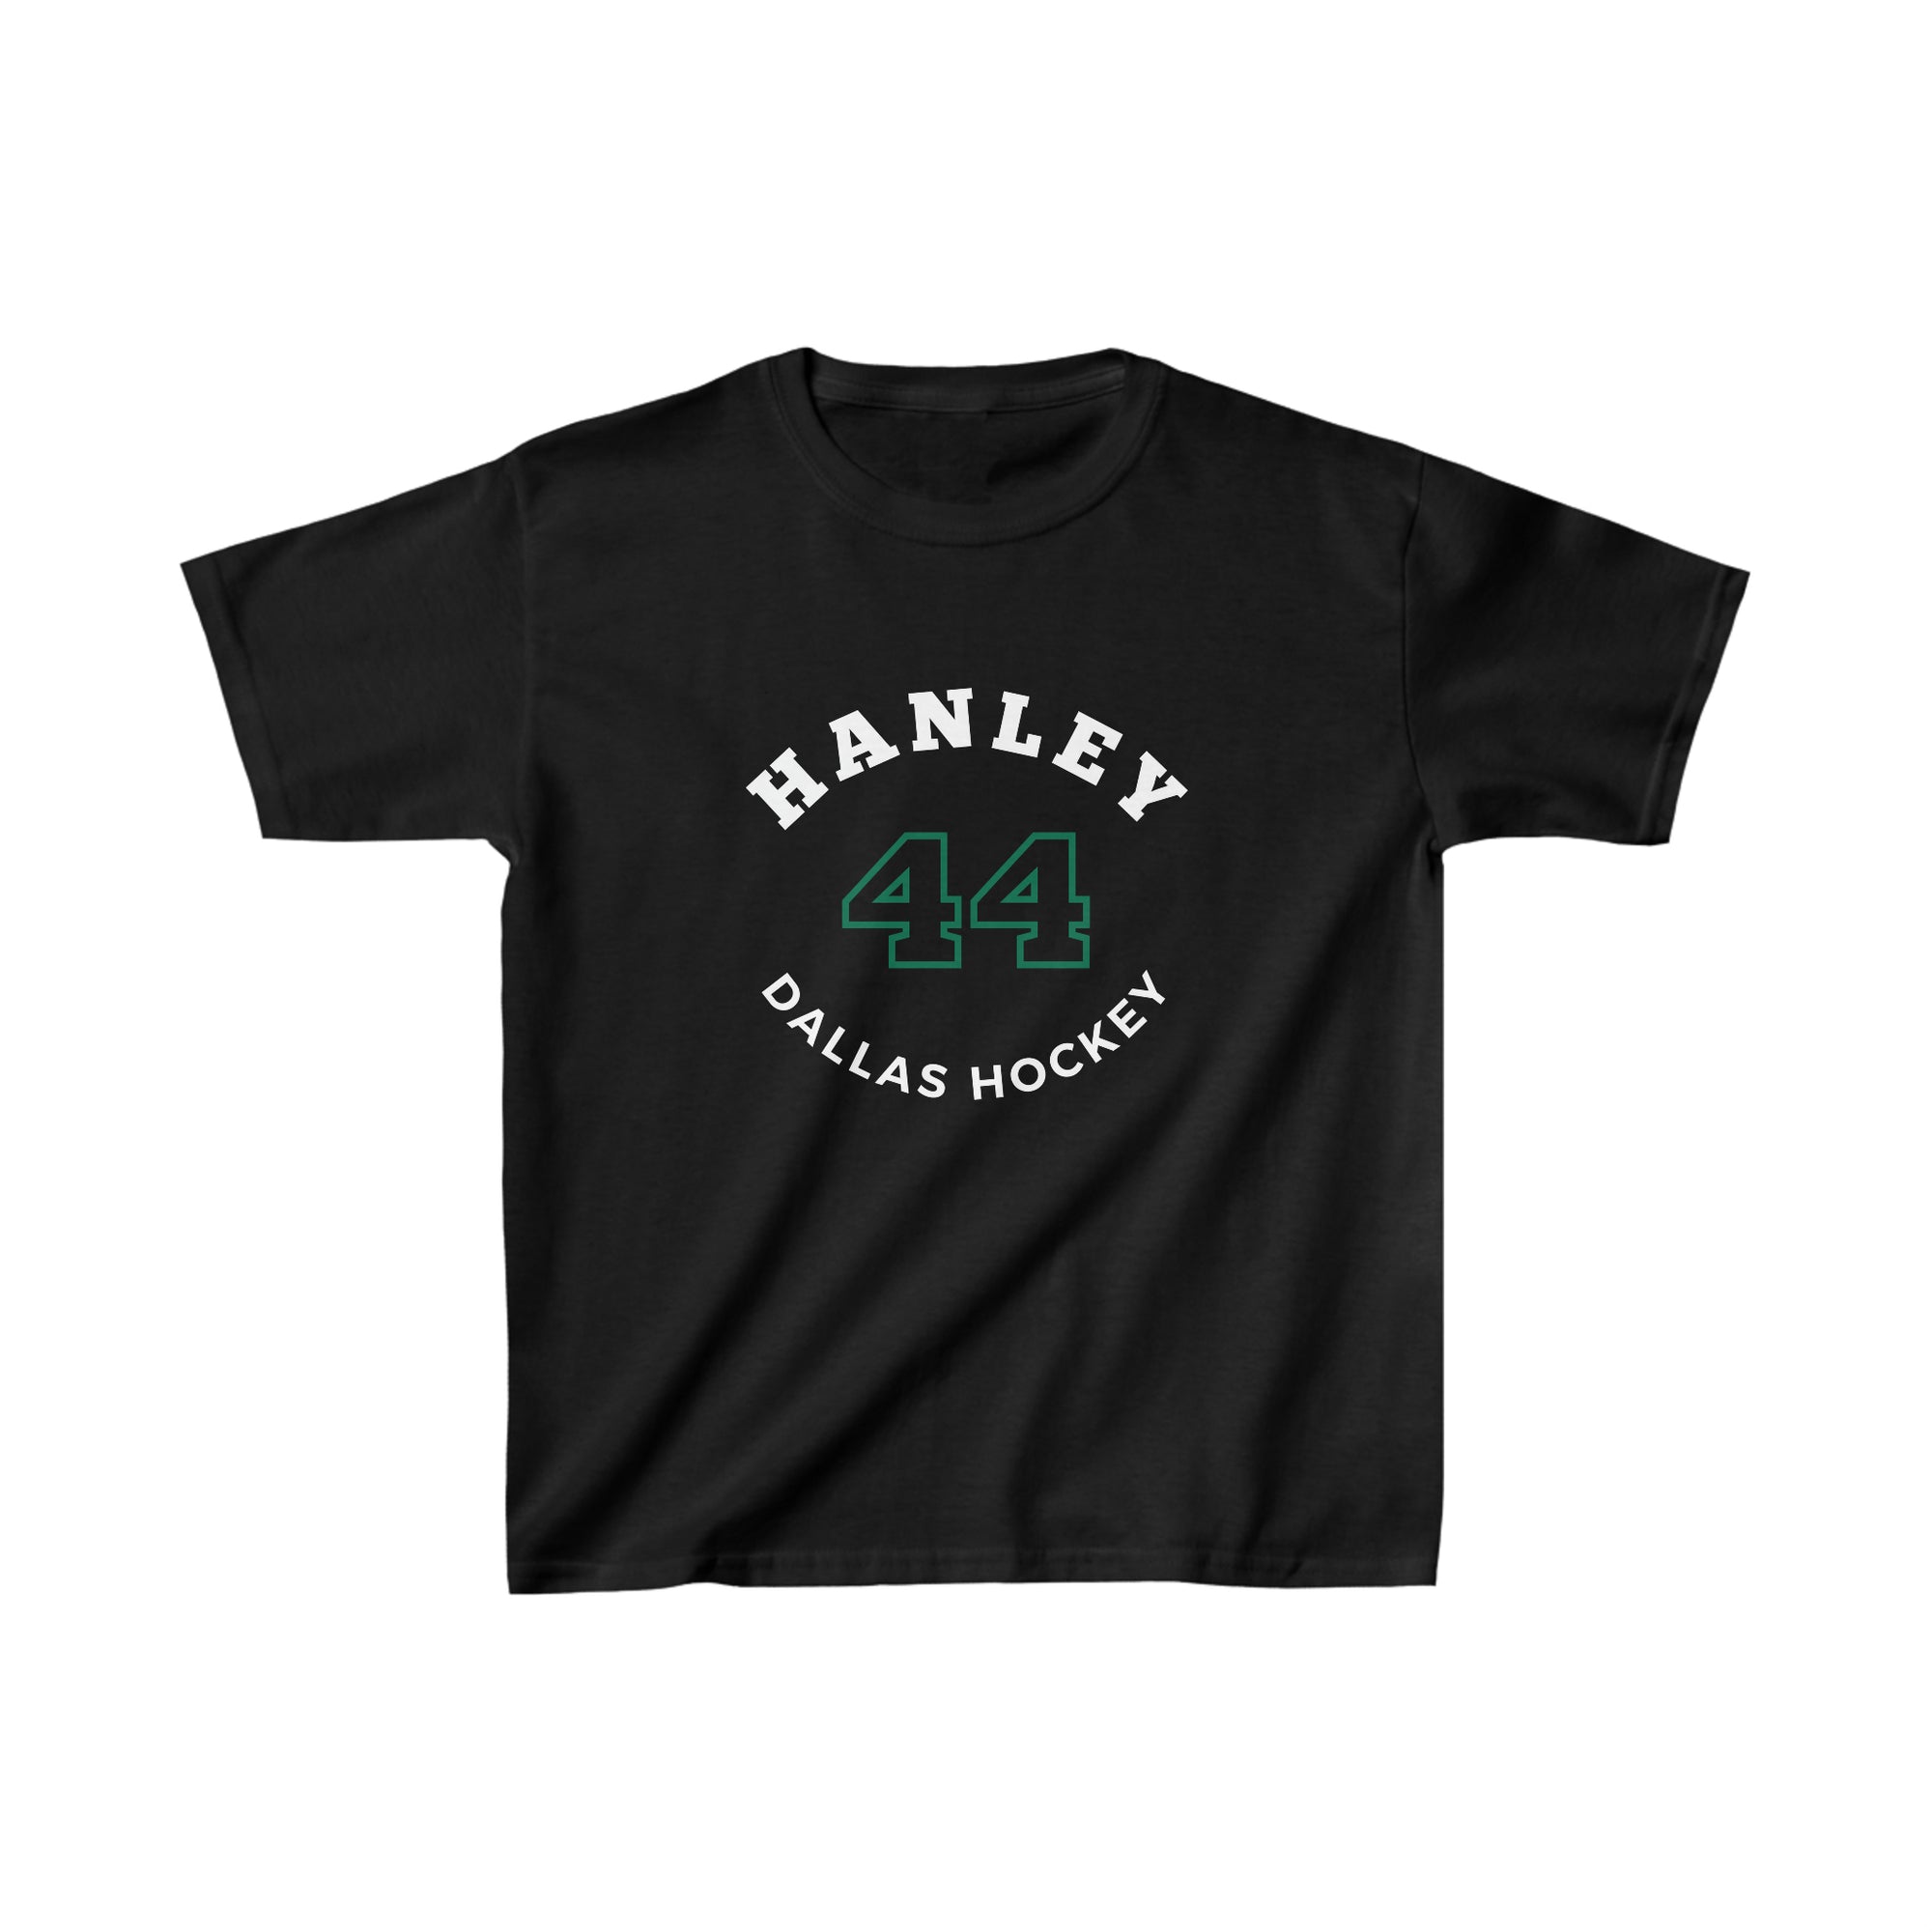 Hanley 44 Dallas Hockey Number Arch Design Kids Tee